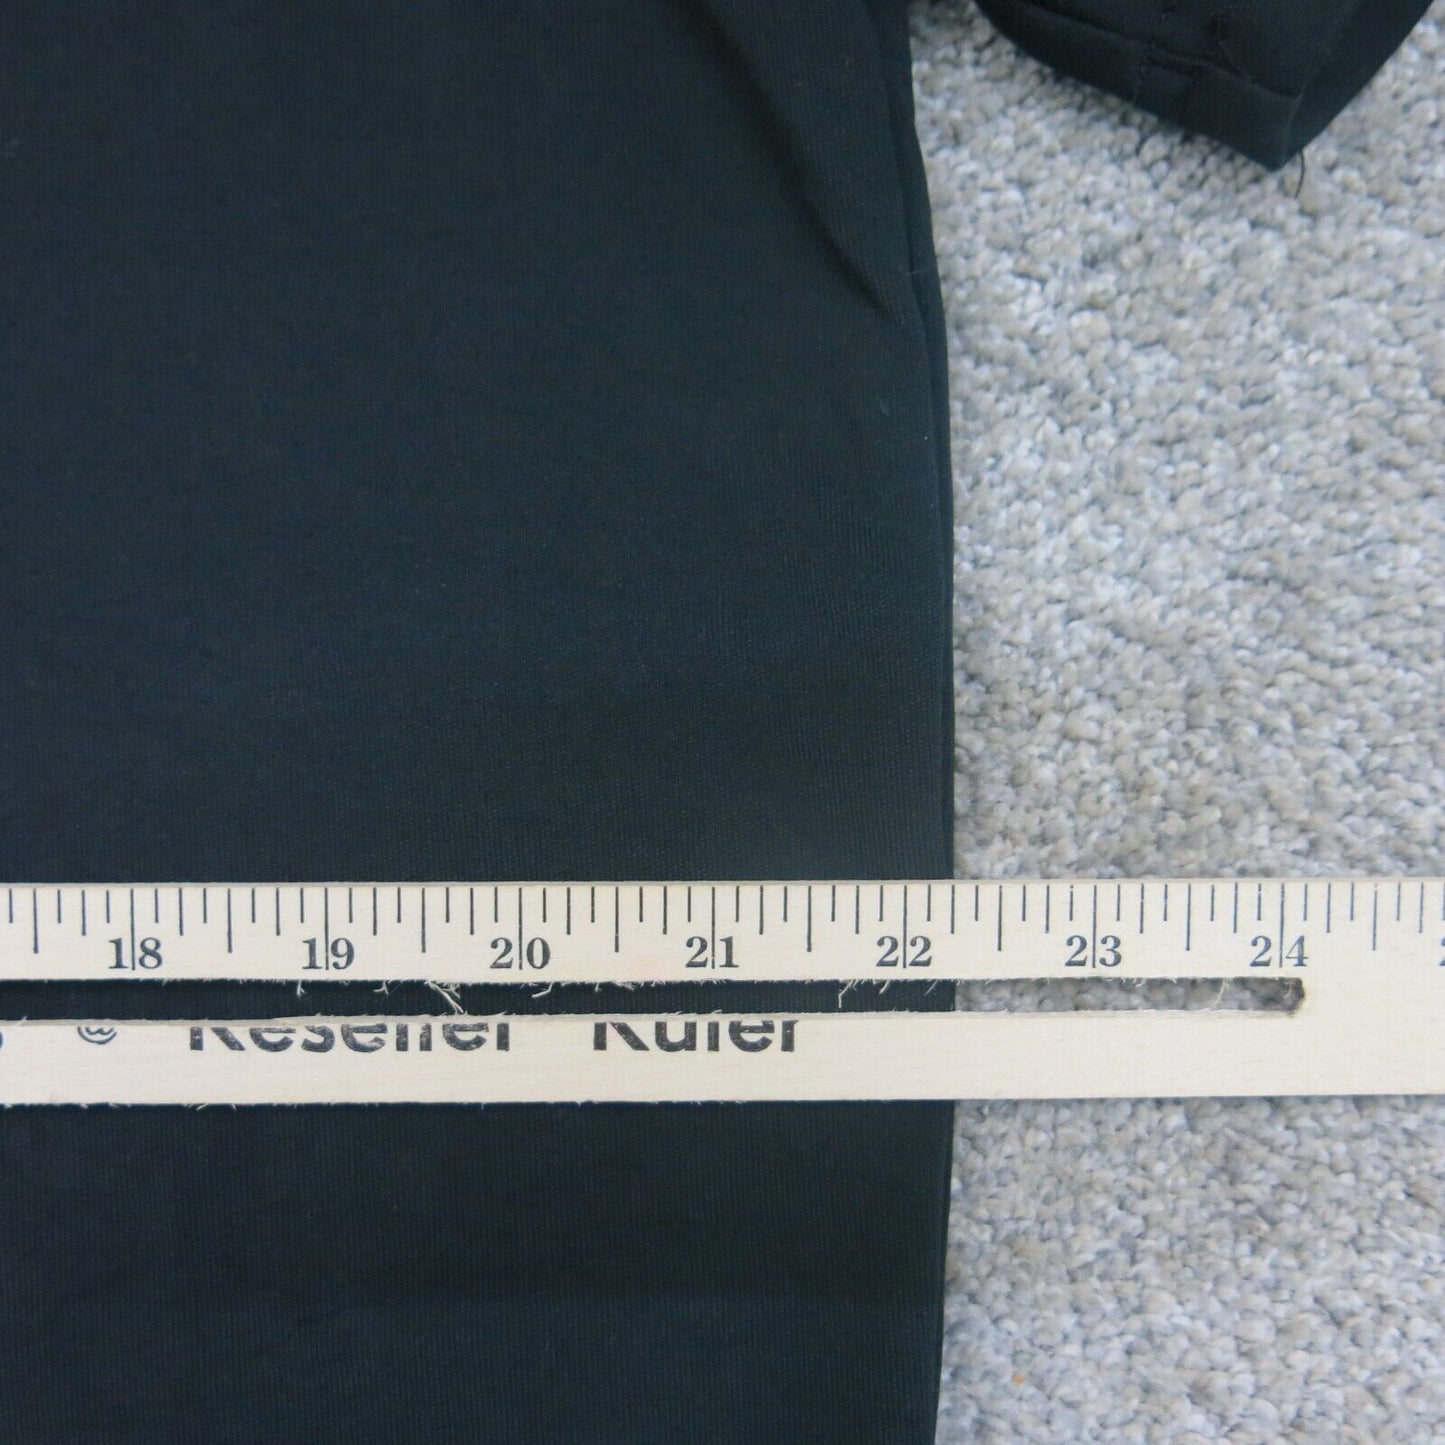 Under Armour Mens Loose Fit Heat Gear Polo Shirt Collared TMI logo Black SZ S